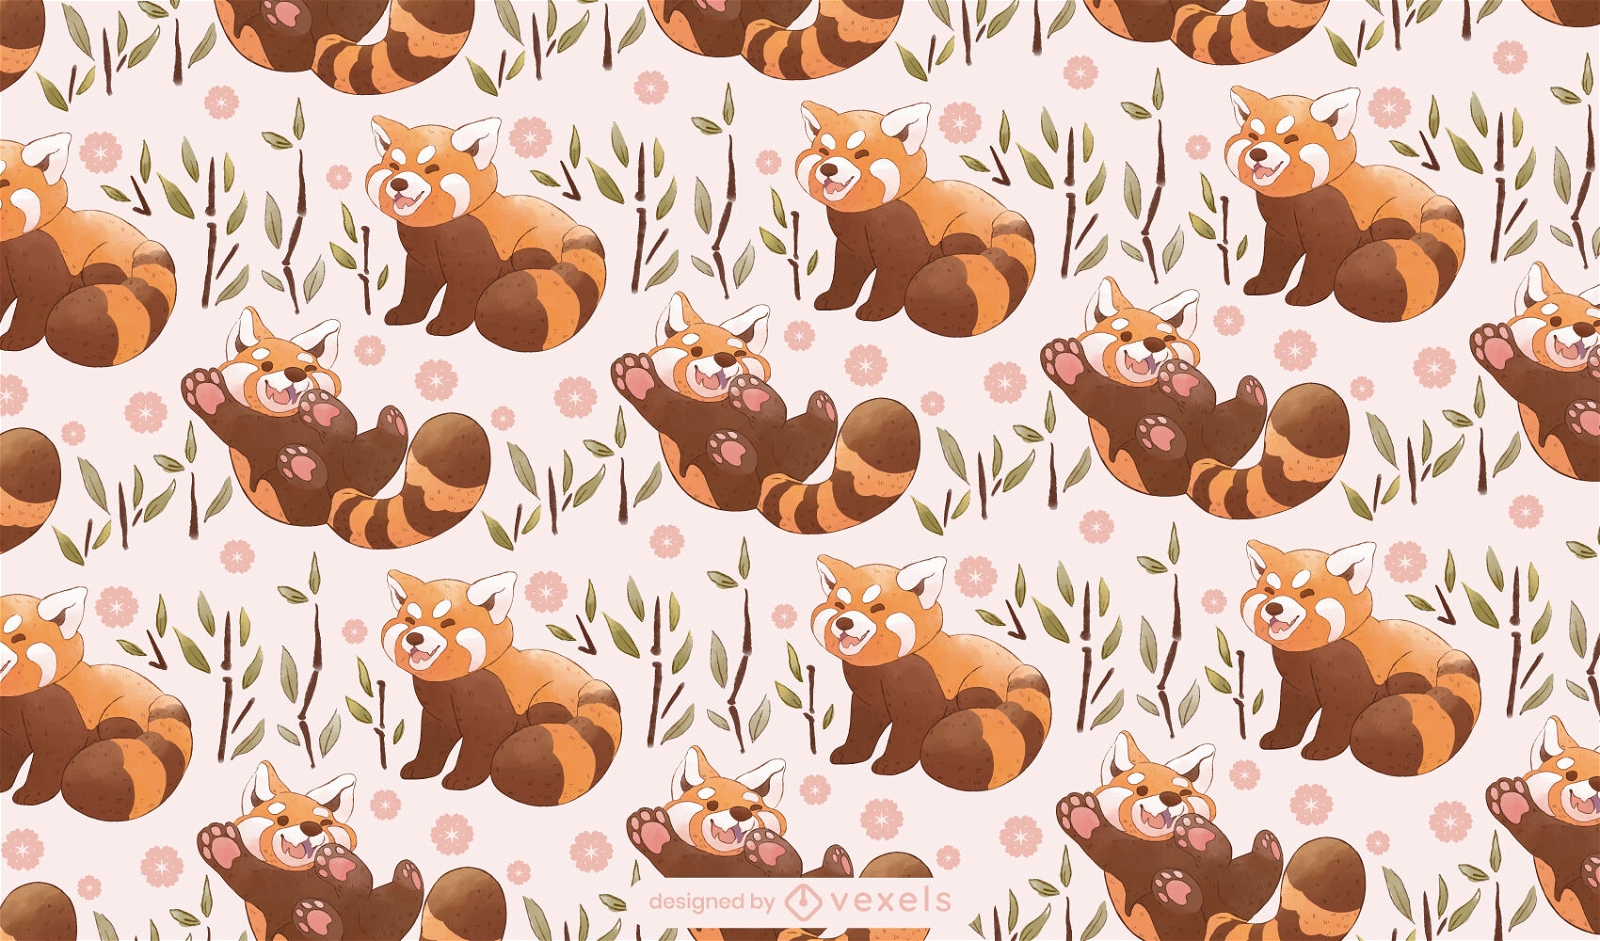 Adorable Red Panda Animals Pattern Design Vector Download